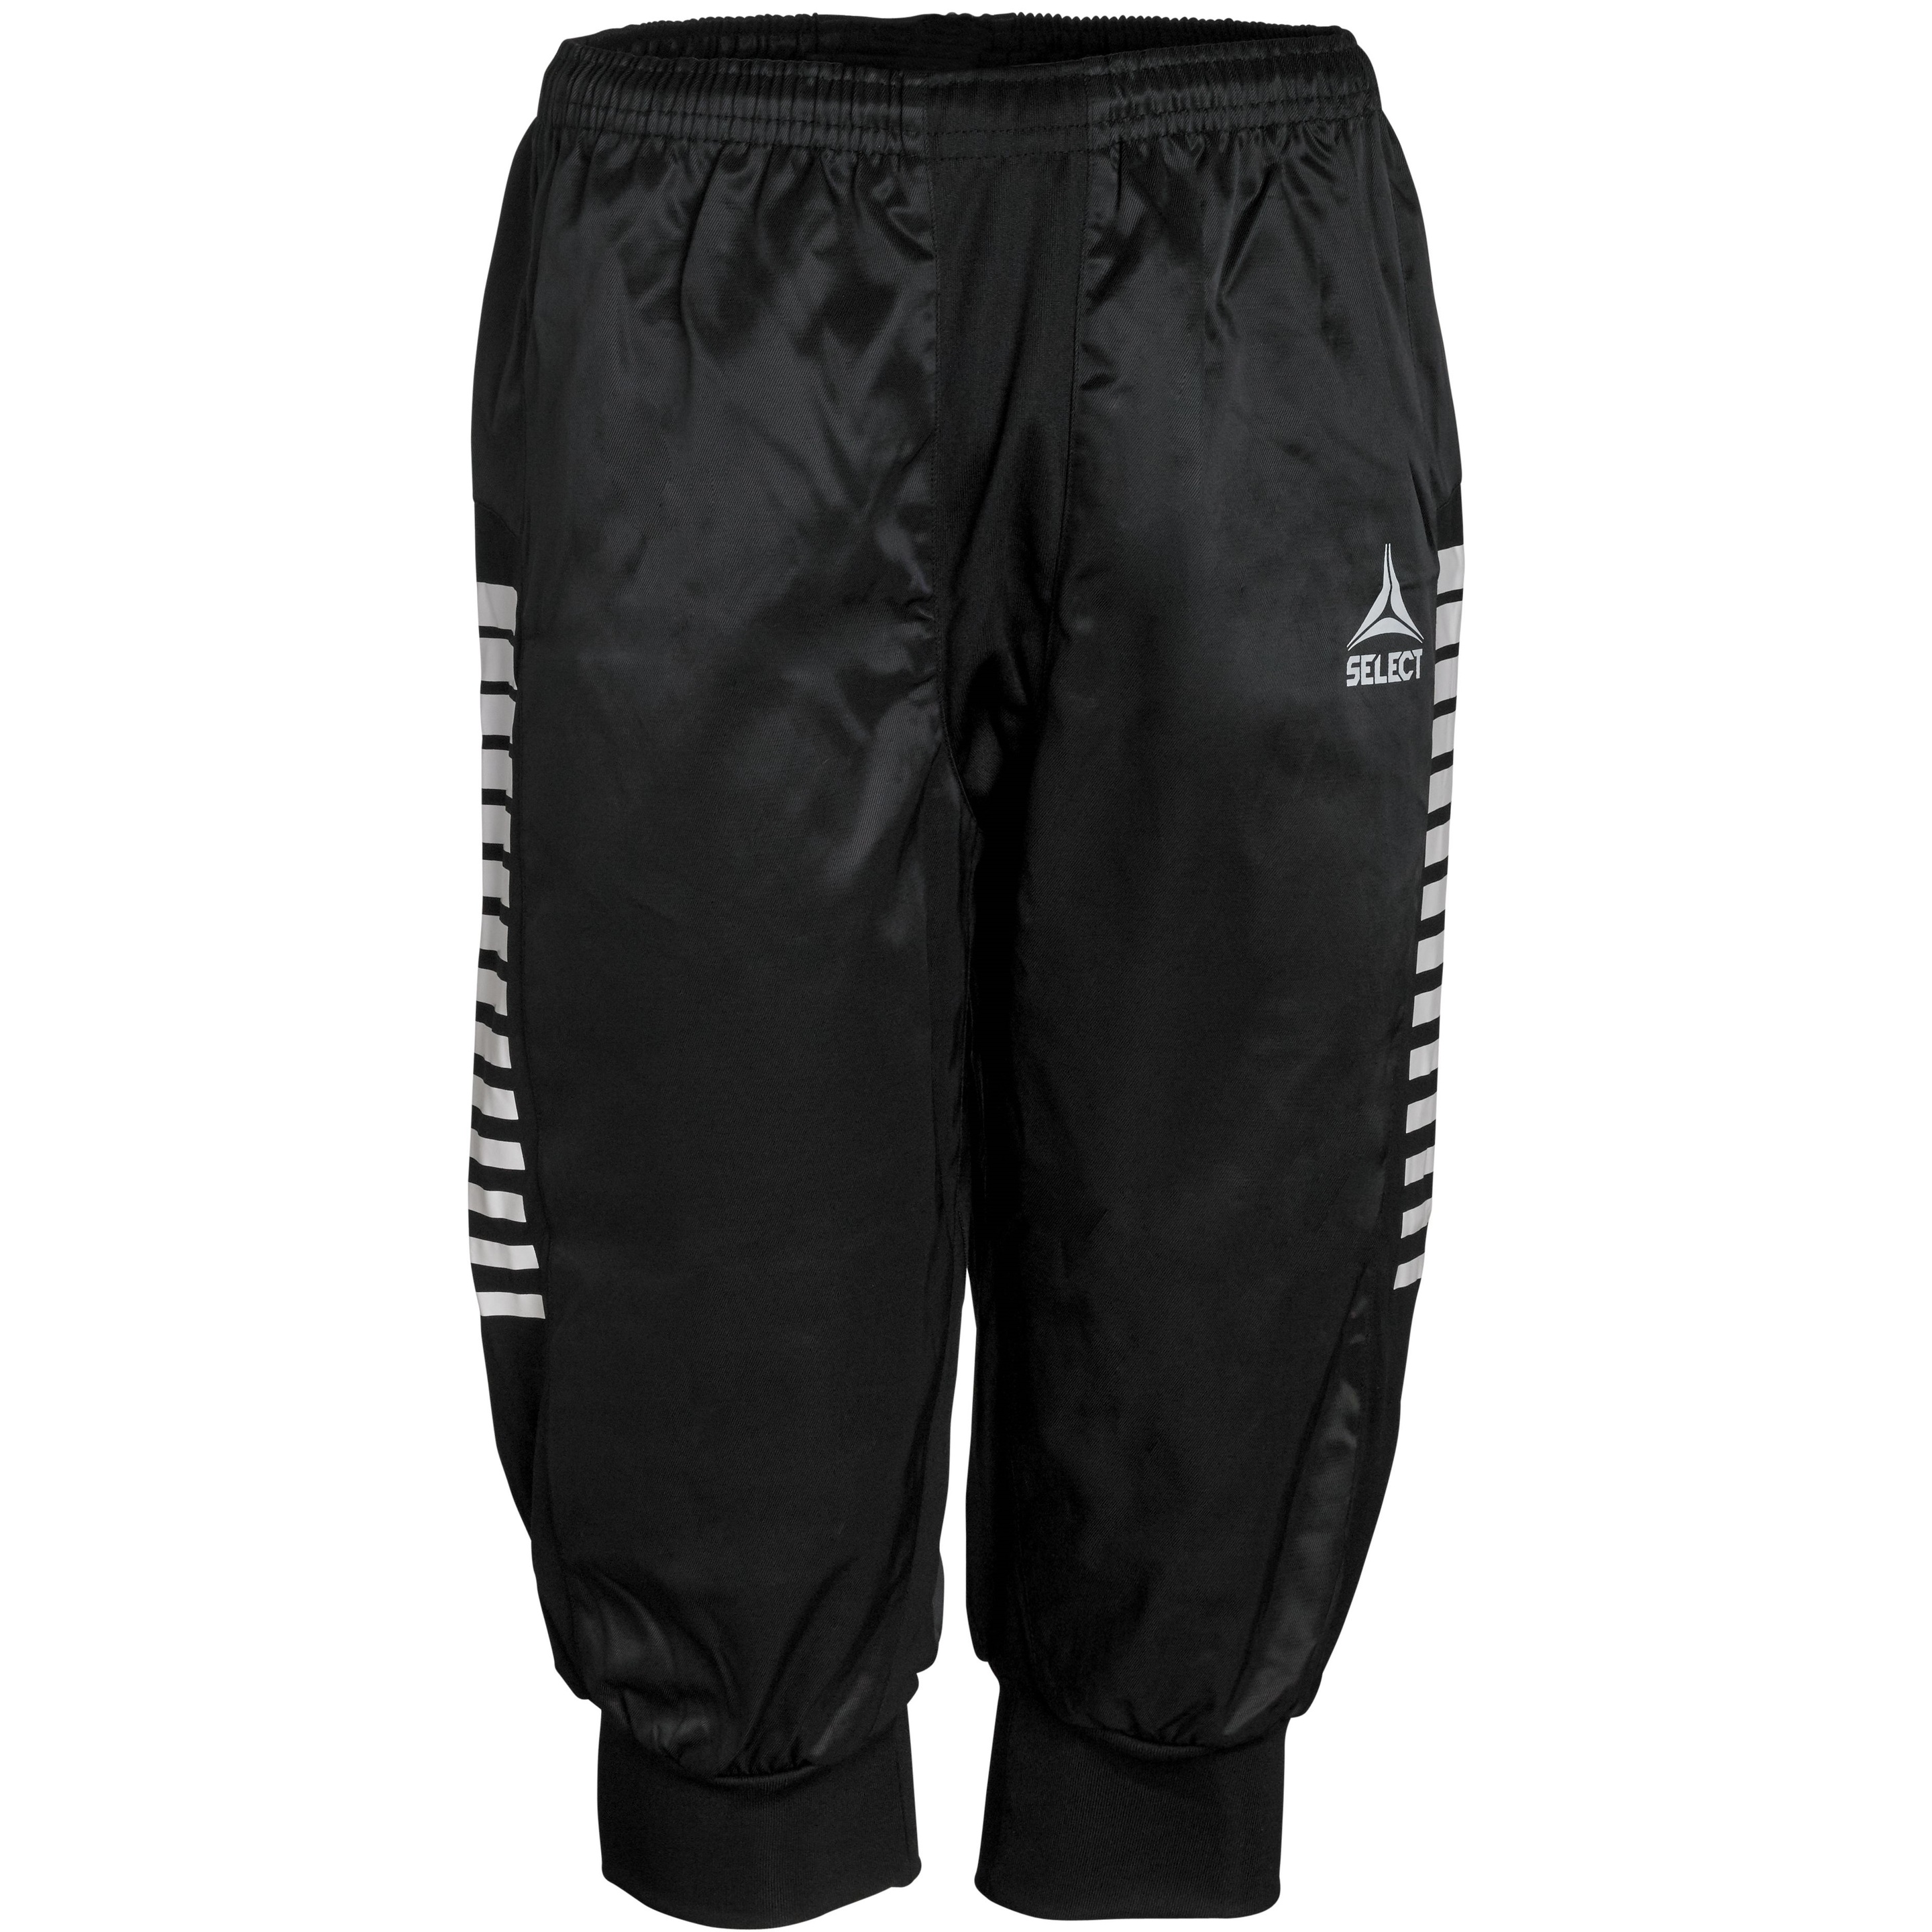 Pantalones Cortos Select Spain - negro - 